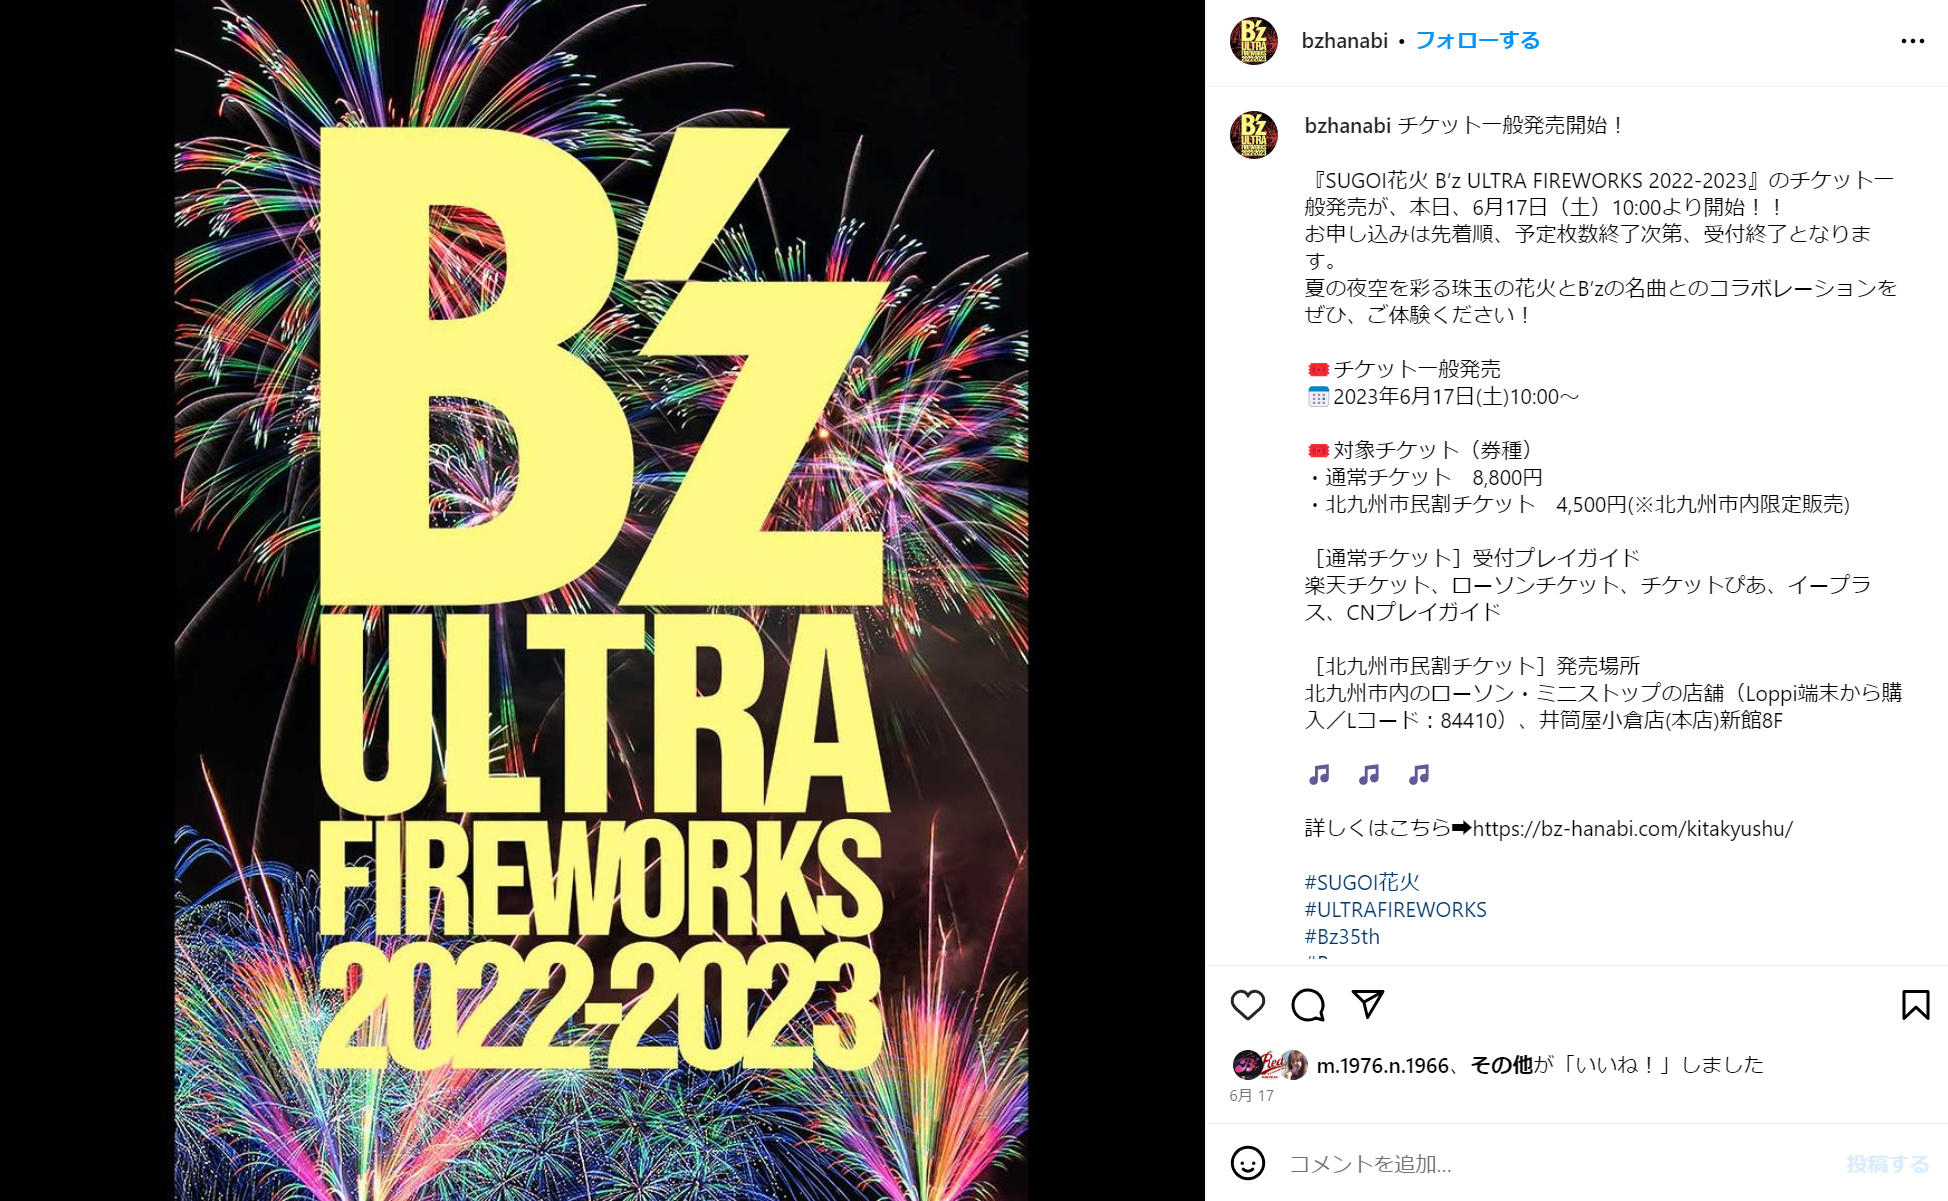 SUGOI花火『B’z ULTRA FIREWORKS 2022-2023』北九州公演のチケット一般発売を告知する公式nstagramの投稿